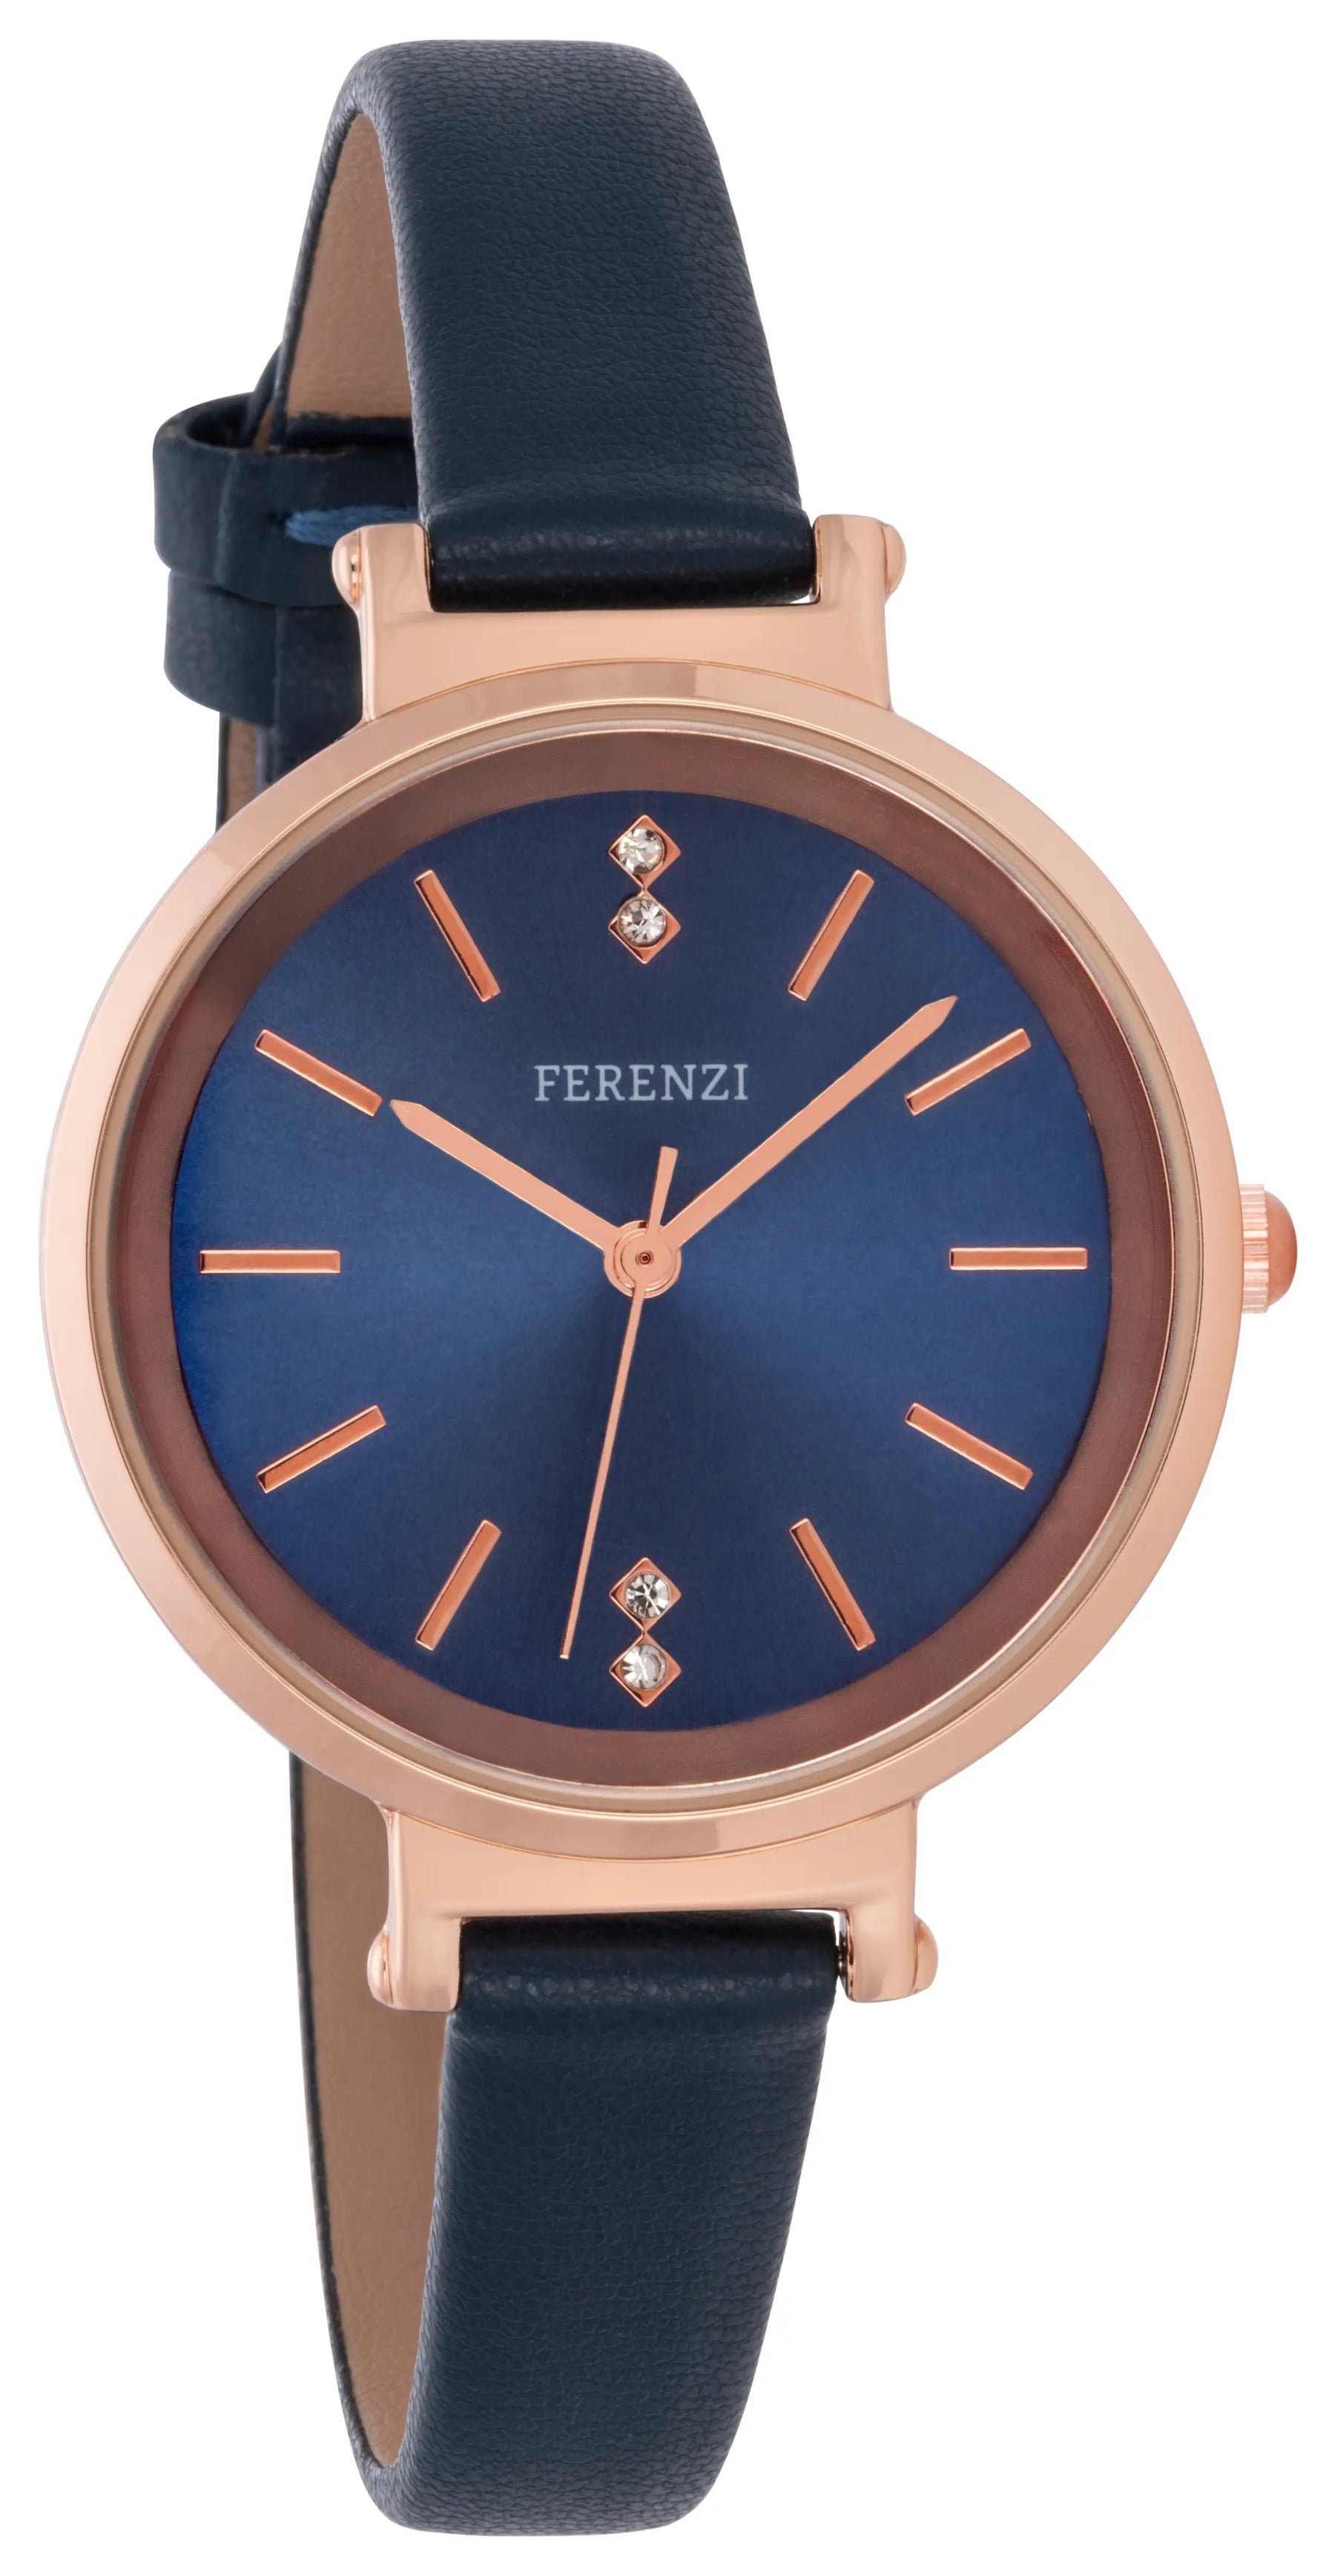 Marciano - Ferenzi Womens Watch, Rose Gold Bevel, Navy Blue Face & Strap, Navy Blue